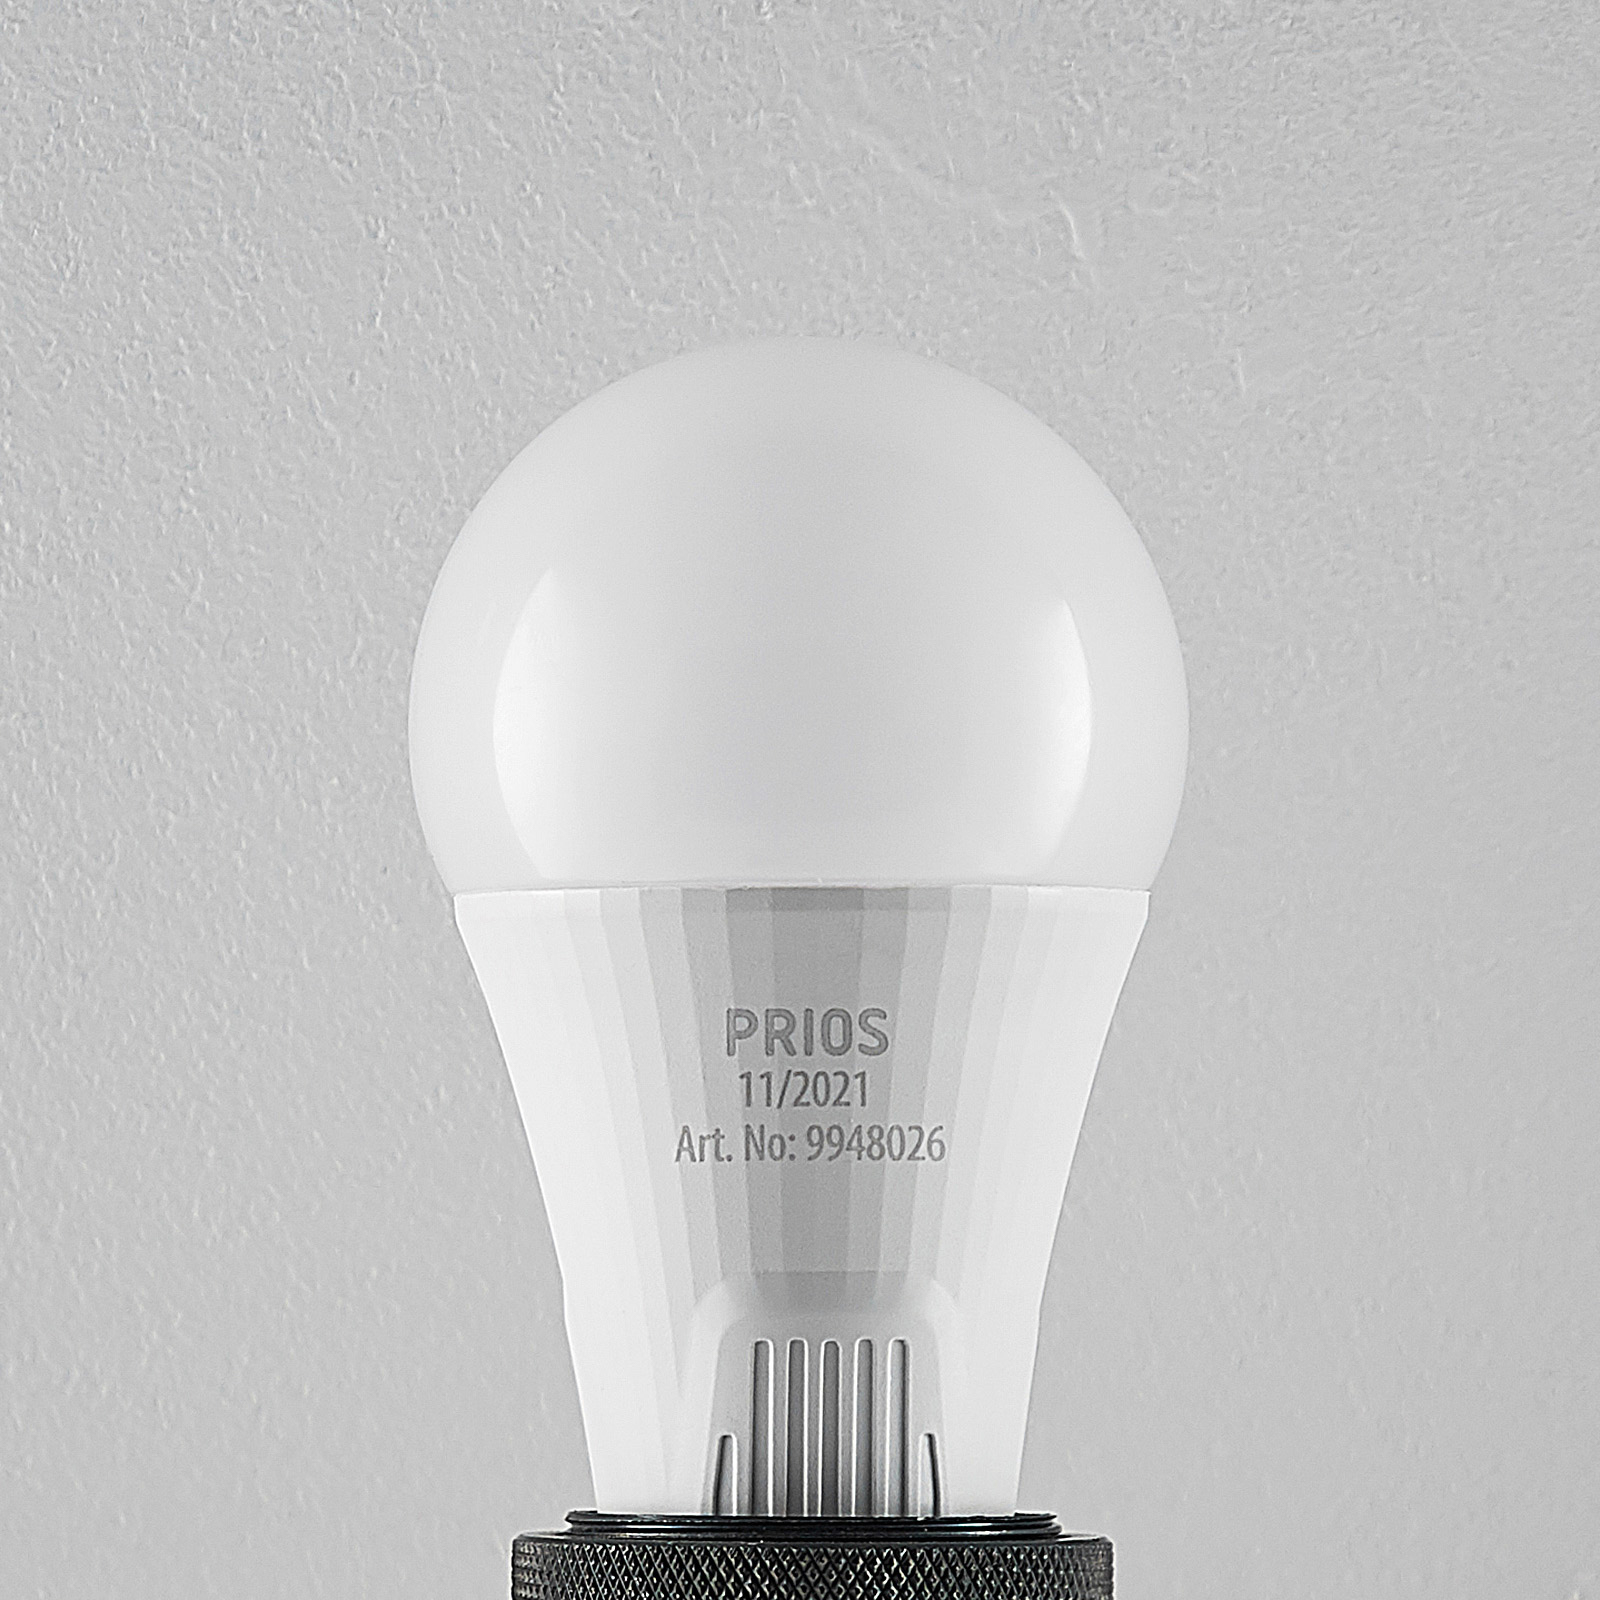 LED-lamppu E27 A60 15 W valkoinen 3 000 K